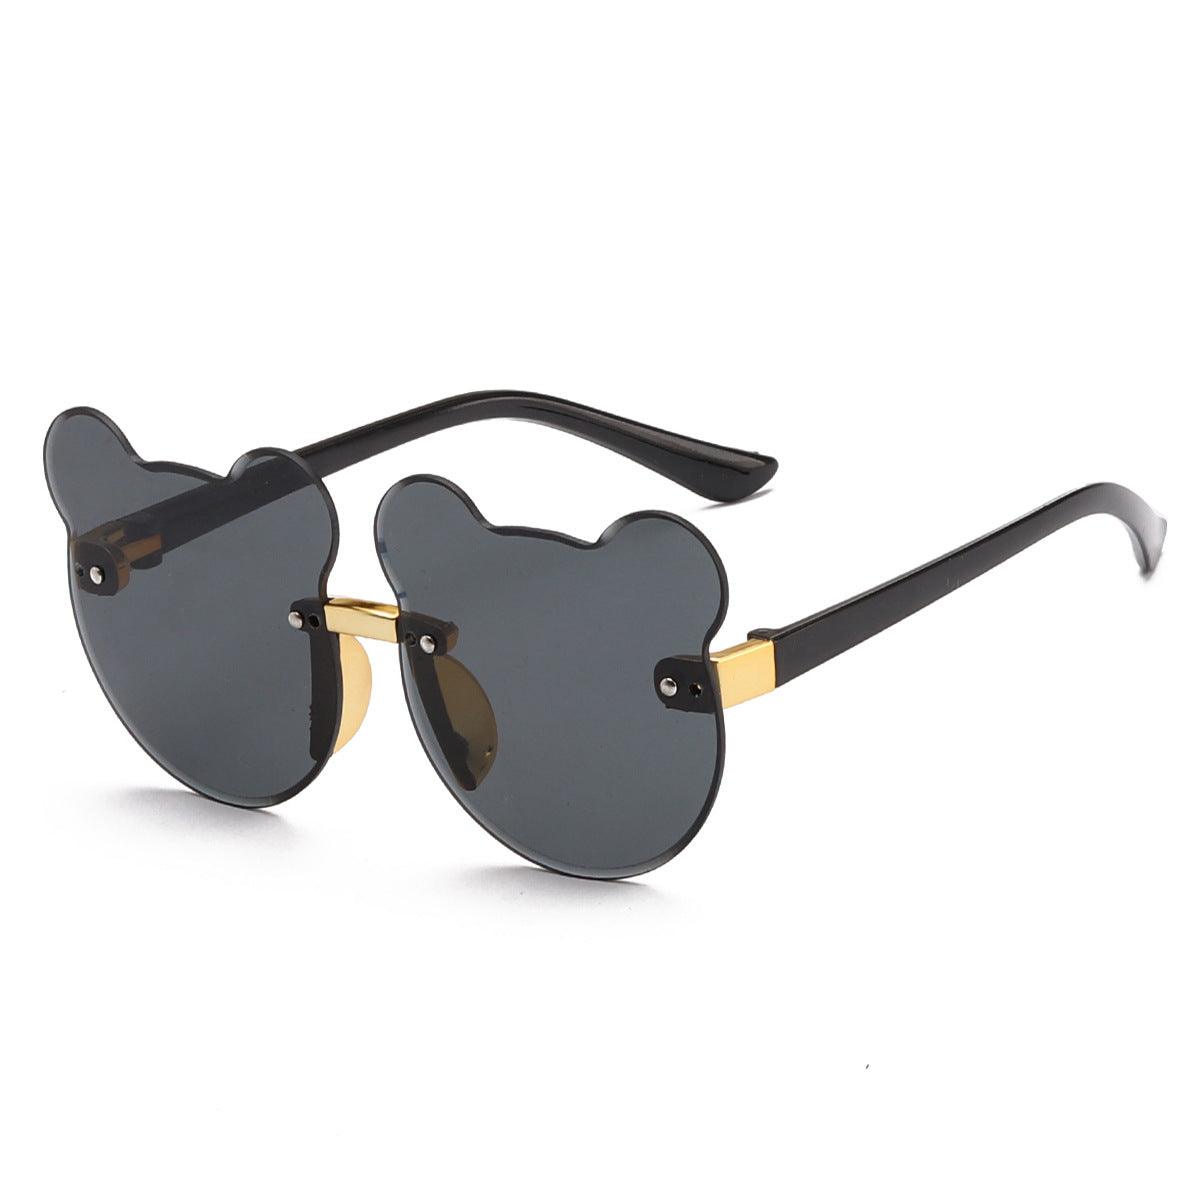 Cat Ear Kids Sunglasses Frameless Shape - TryKid